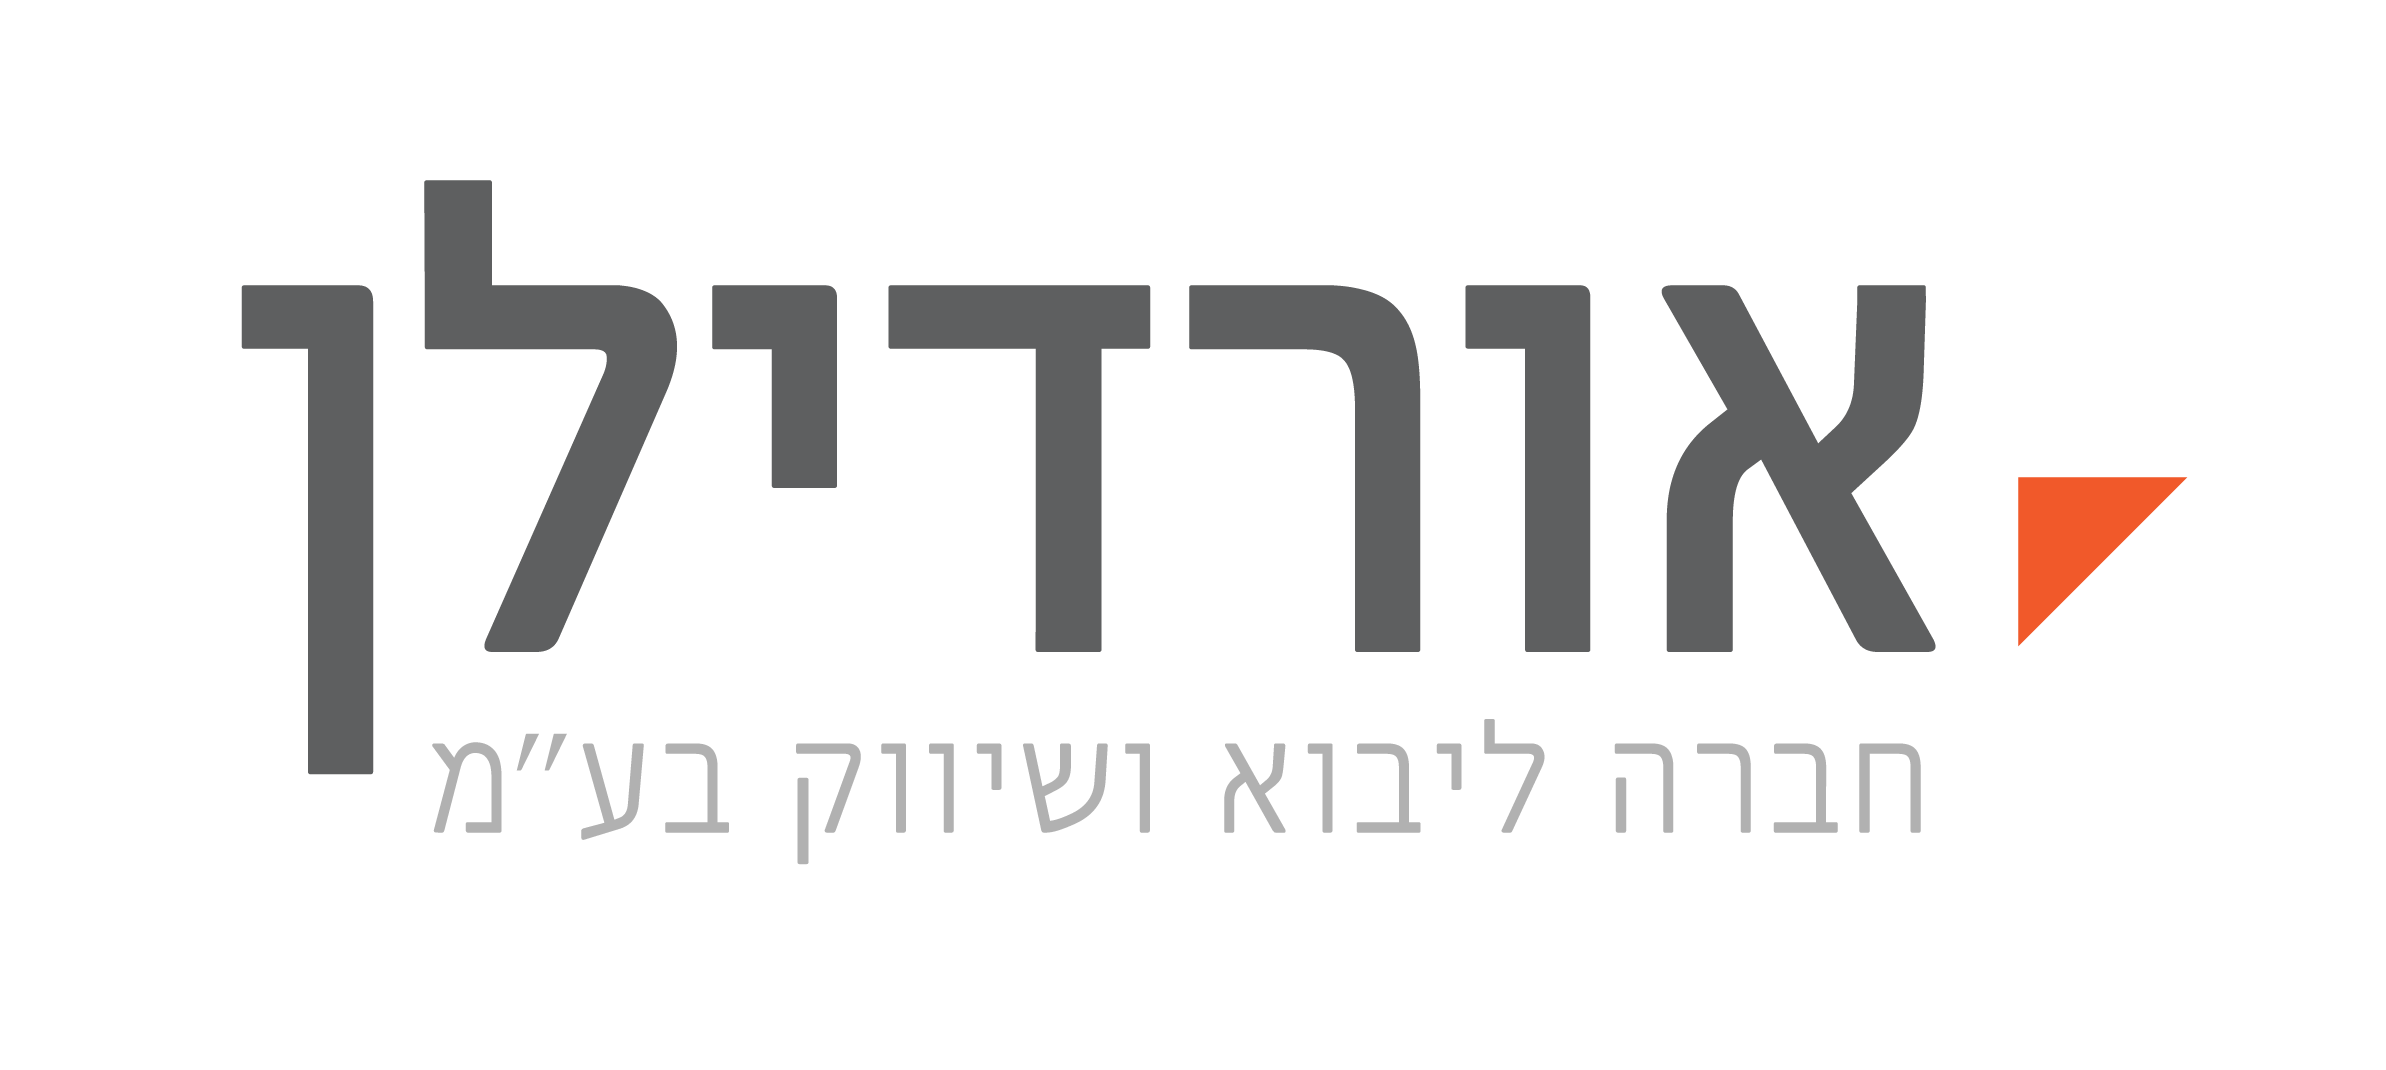 Ordilan logo